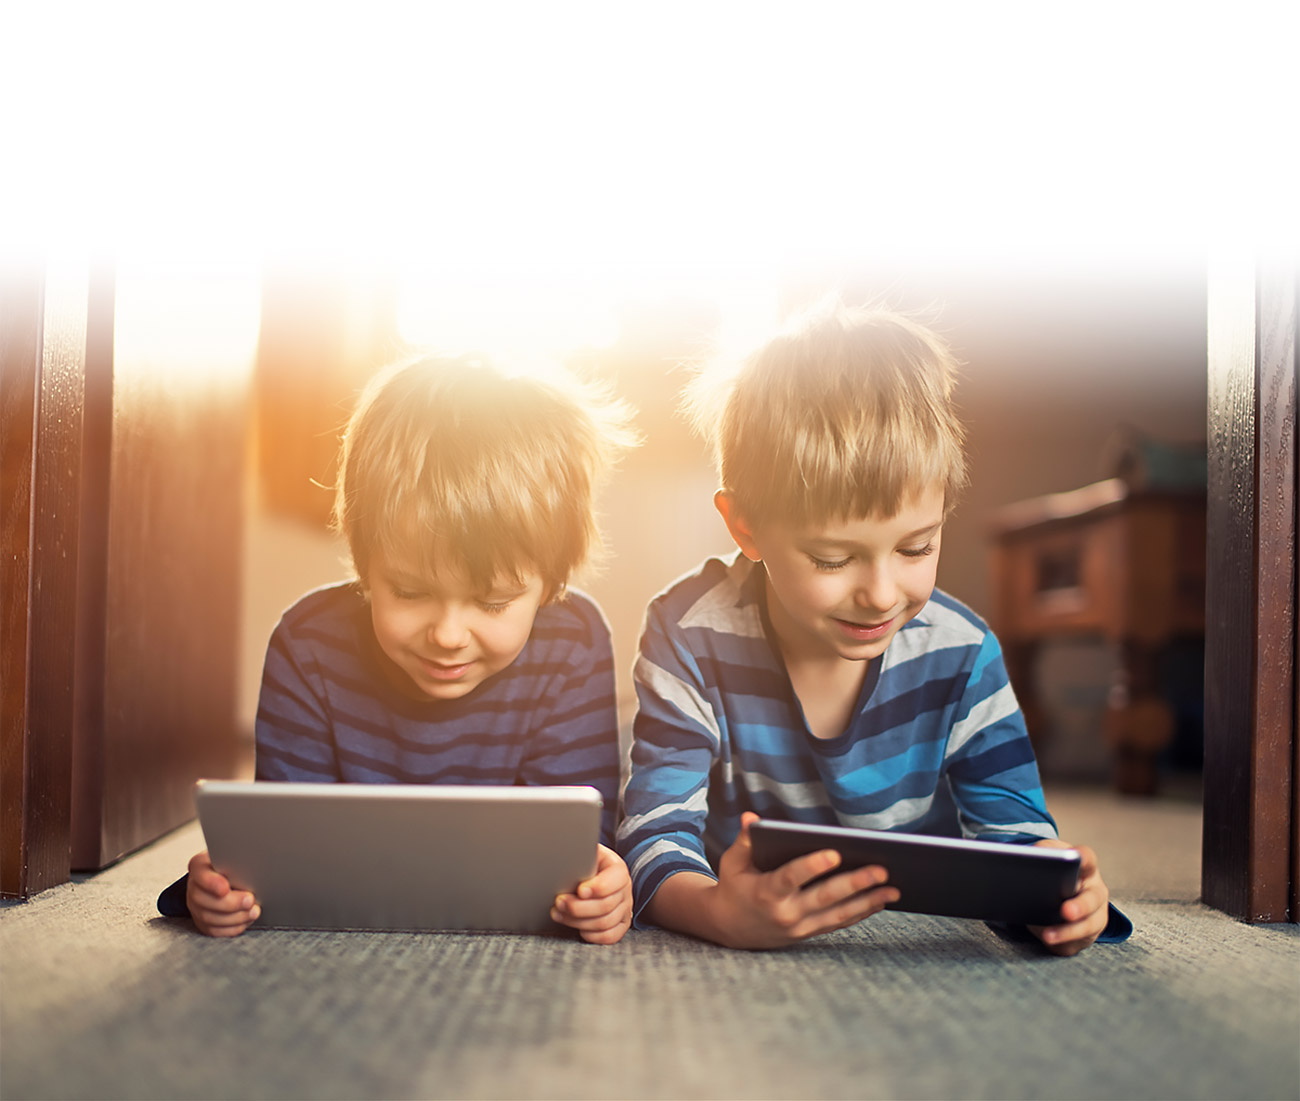 A Safe Online Environment for Children